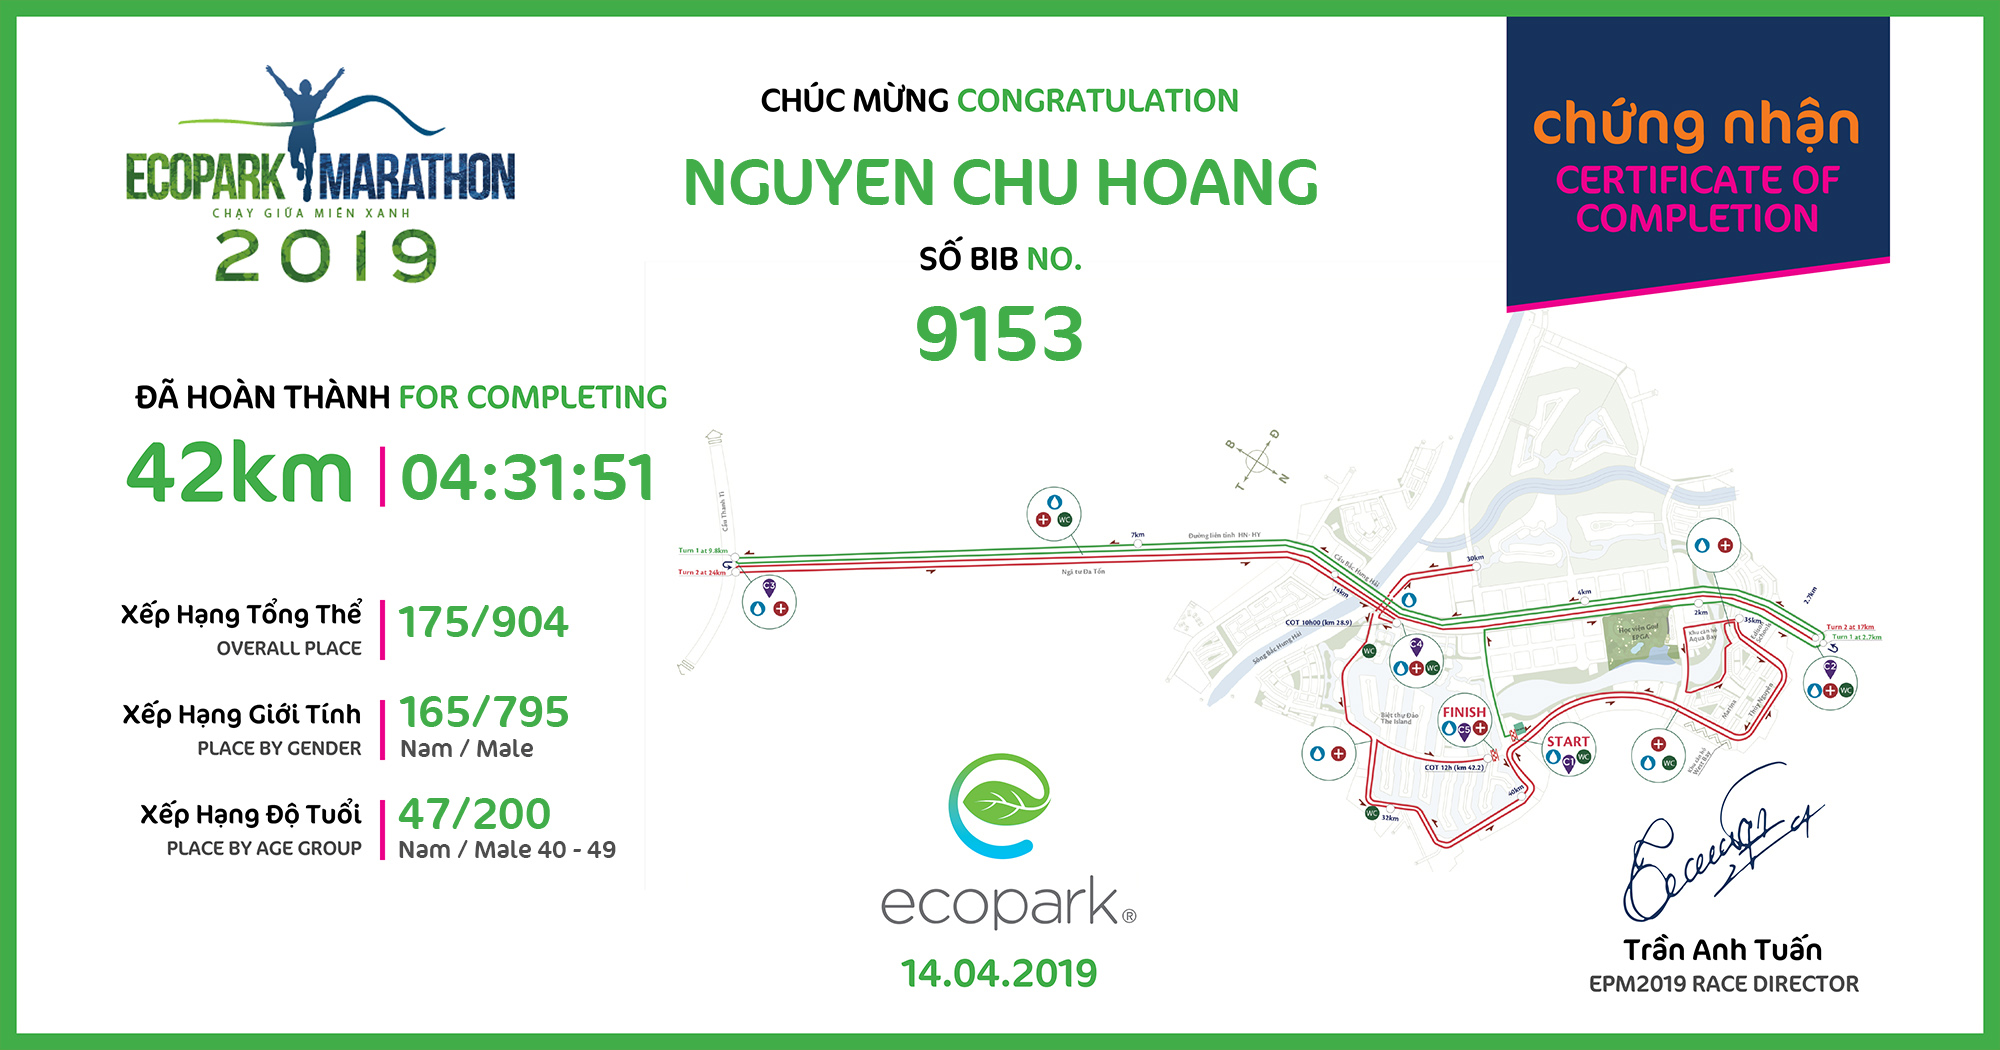 9153 - Nguyen Chu Hoang